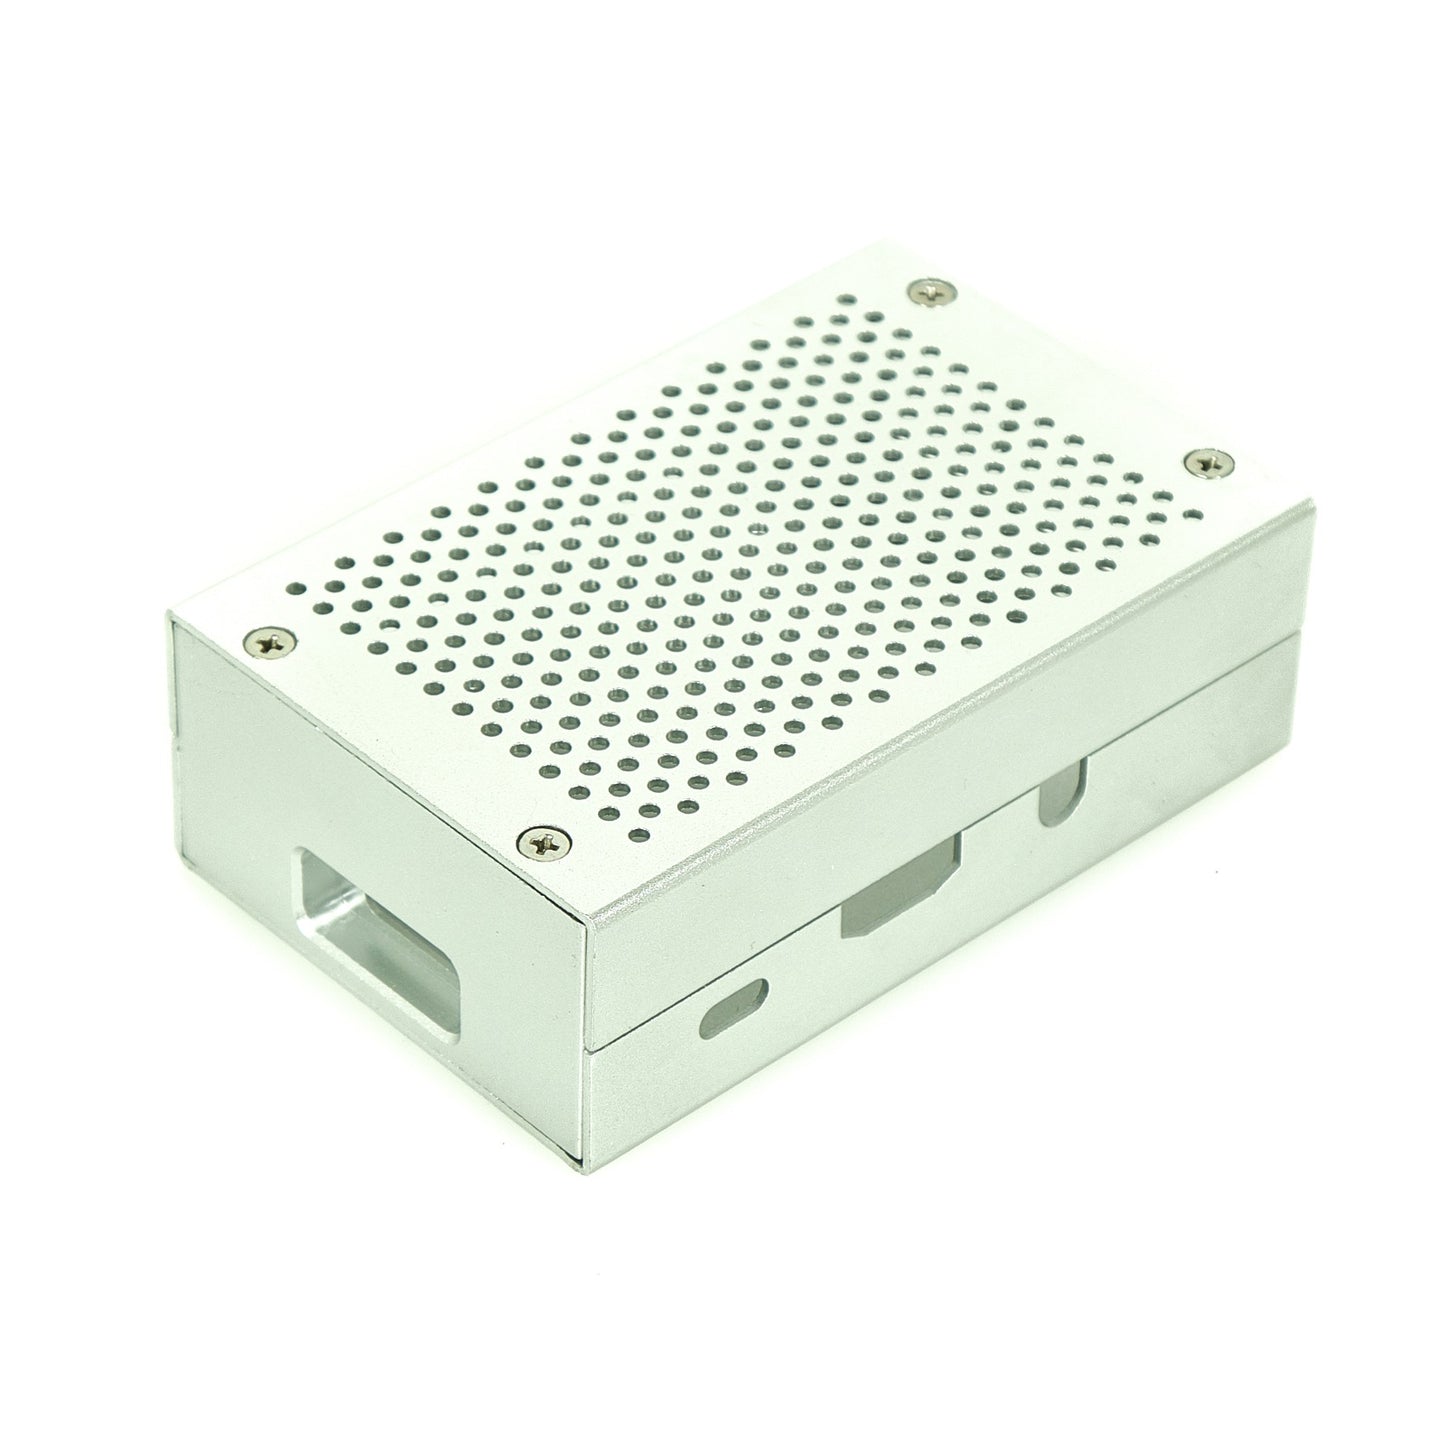 Aluminium-Gehäuse für Raspberry Pi Model B+ / Pi 2 / Pi 3